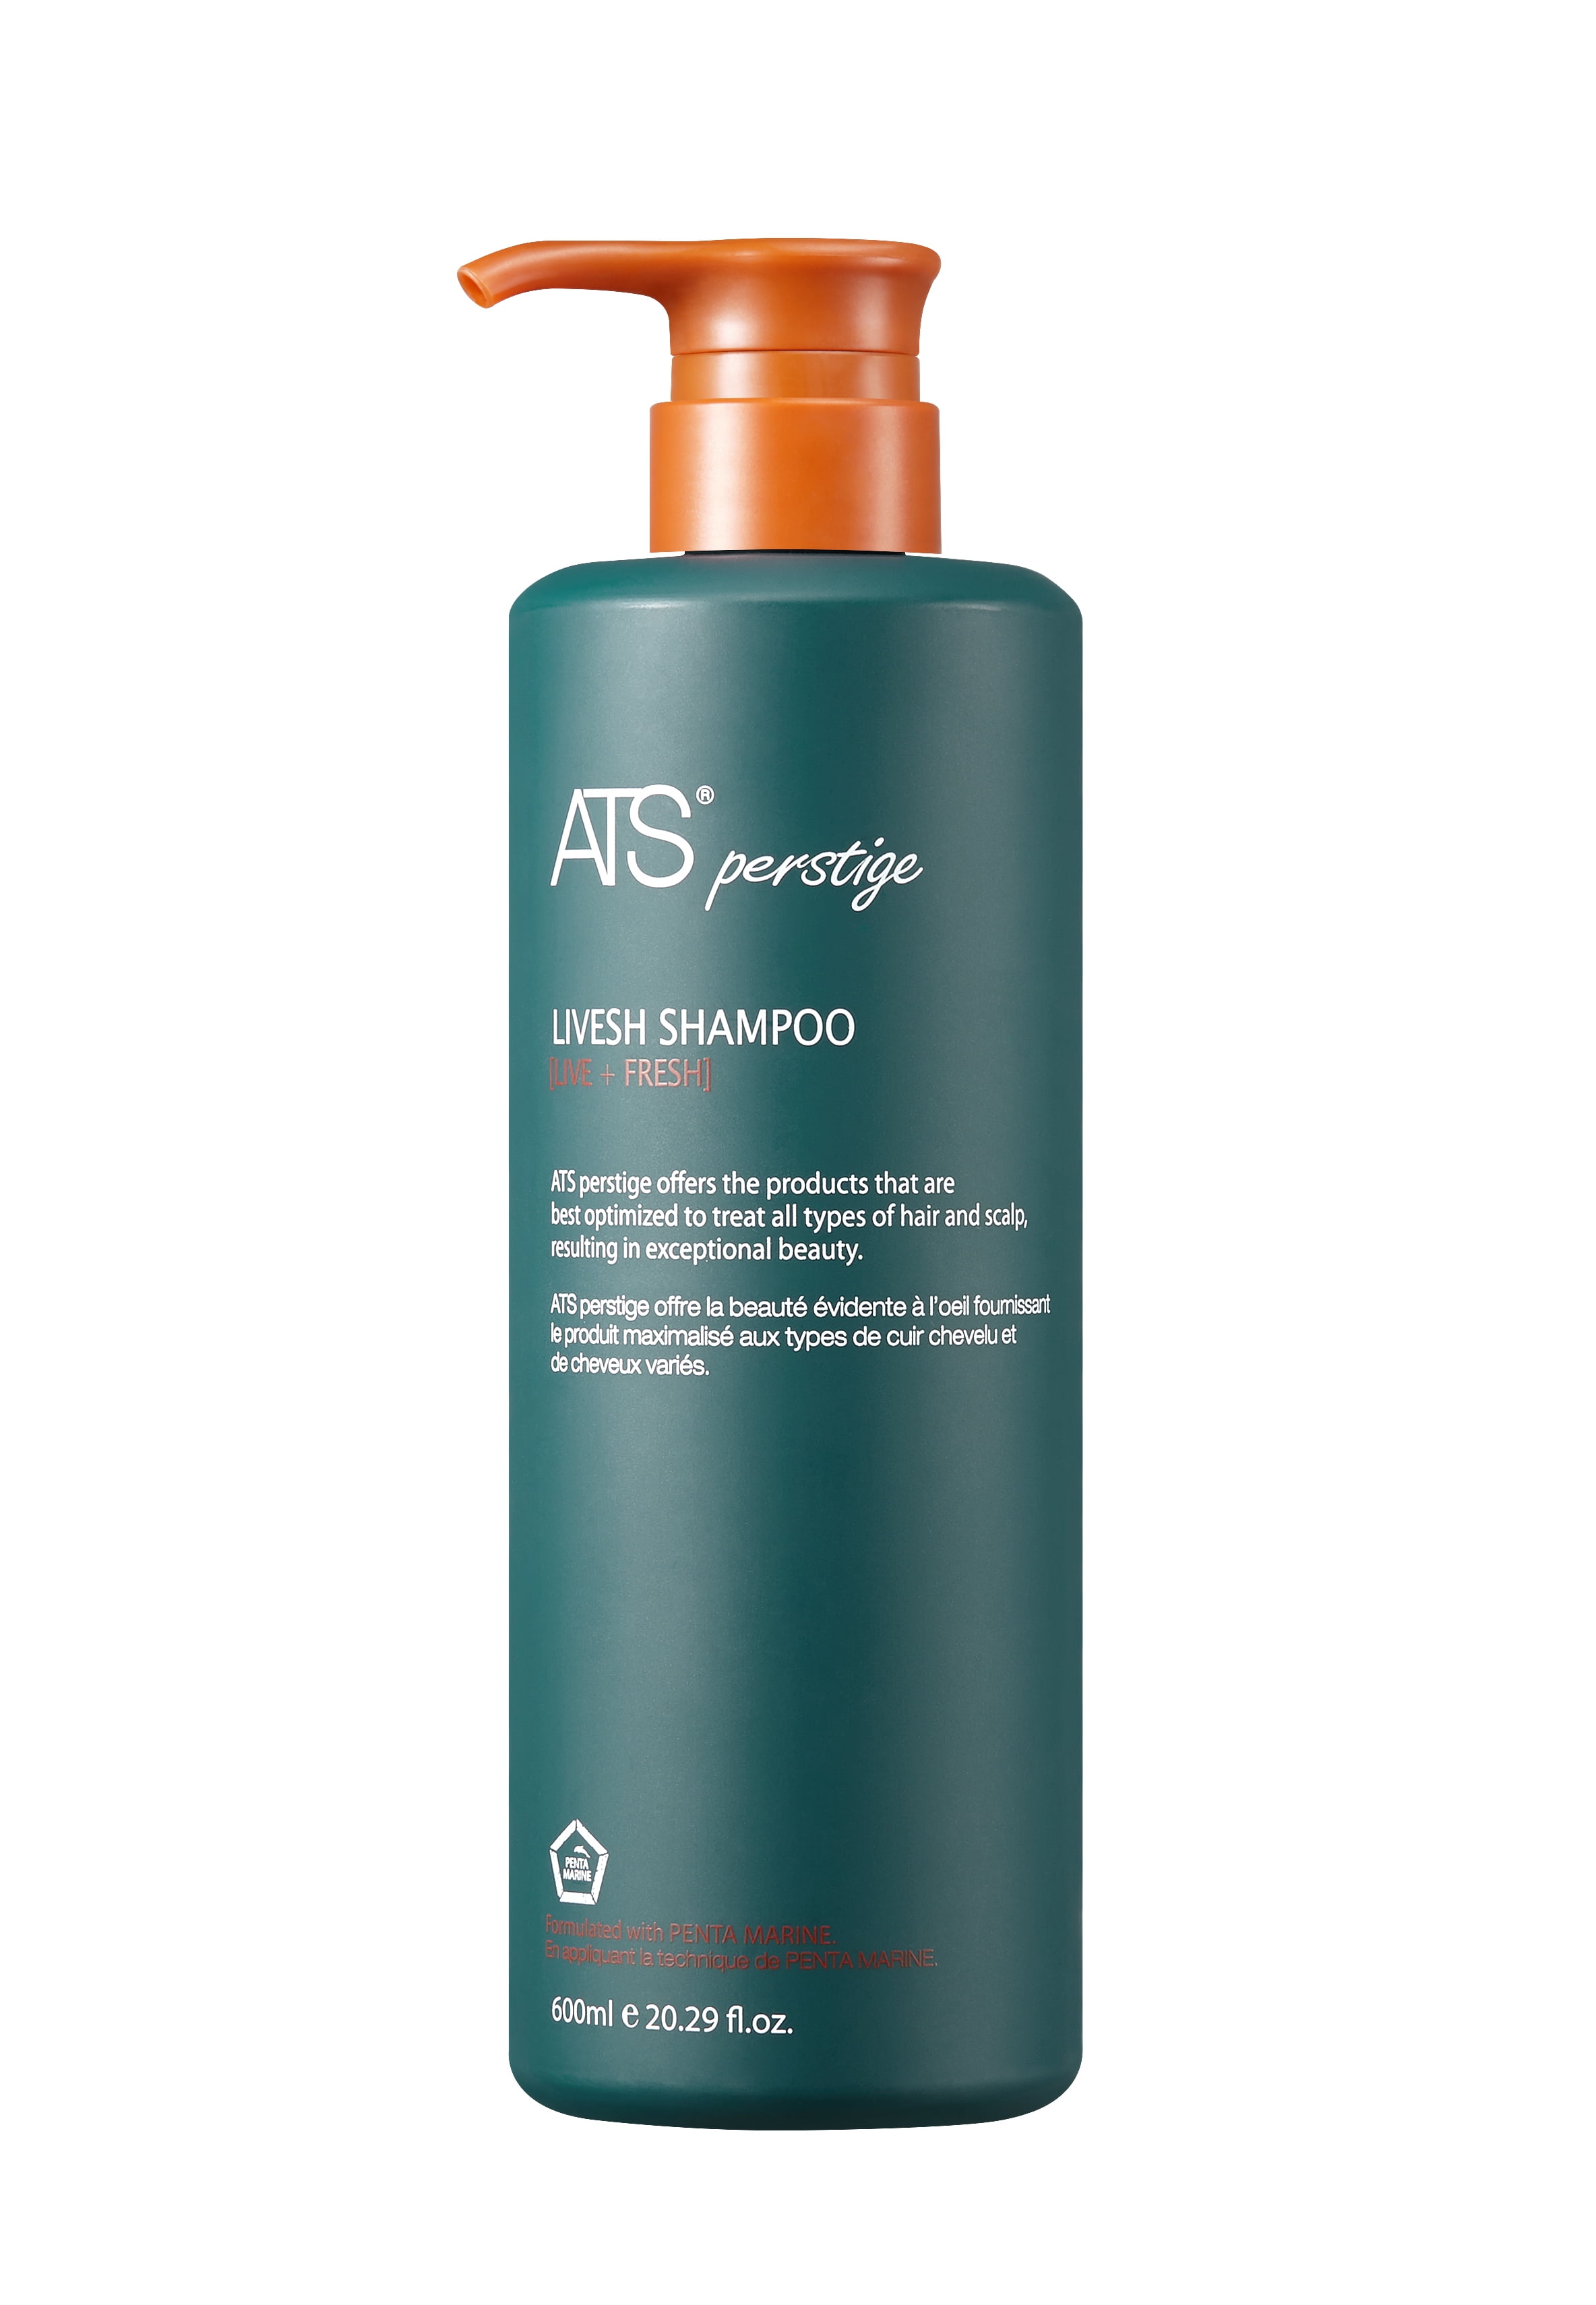 ATS Perstige Livesh Shampoo - 600ML, 20.29fl. oz Hair Loss and Help